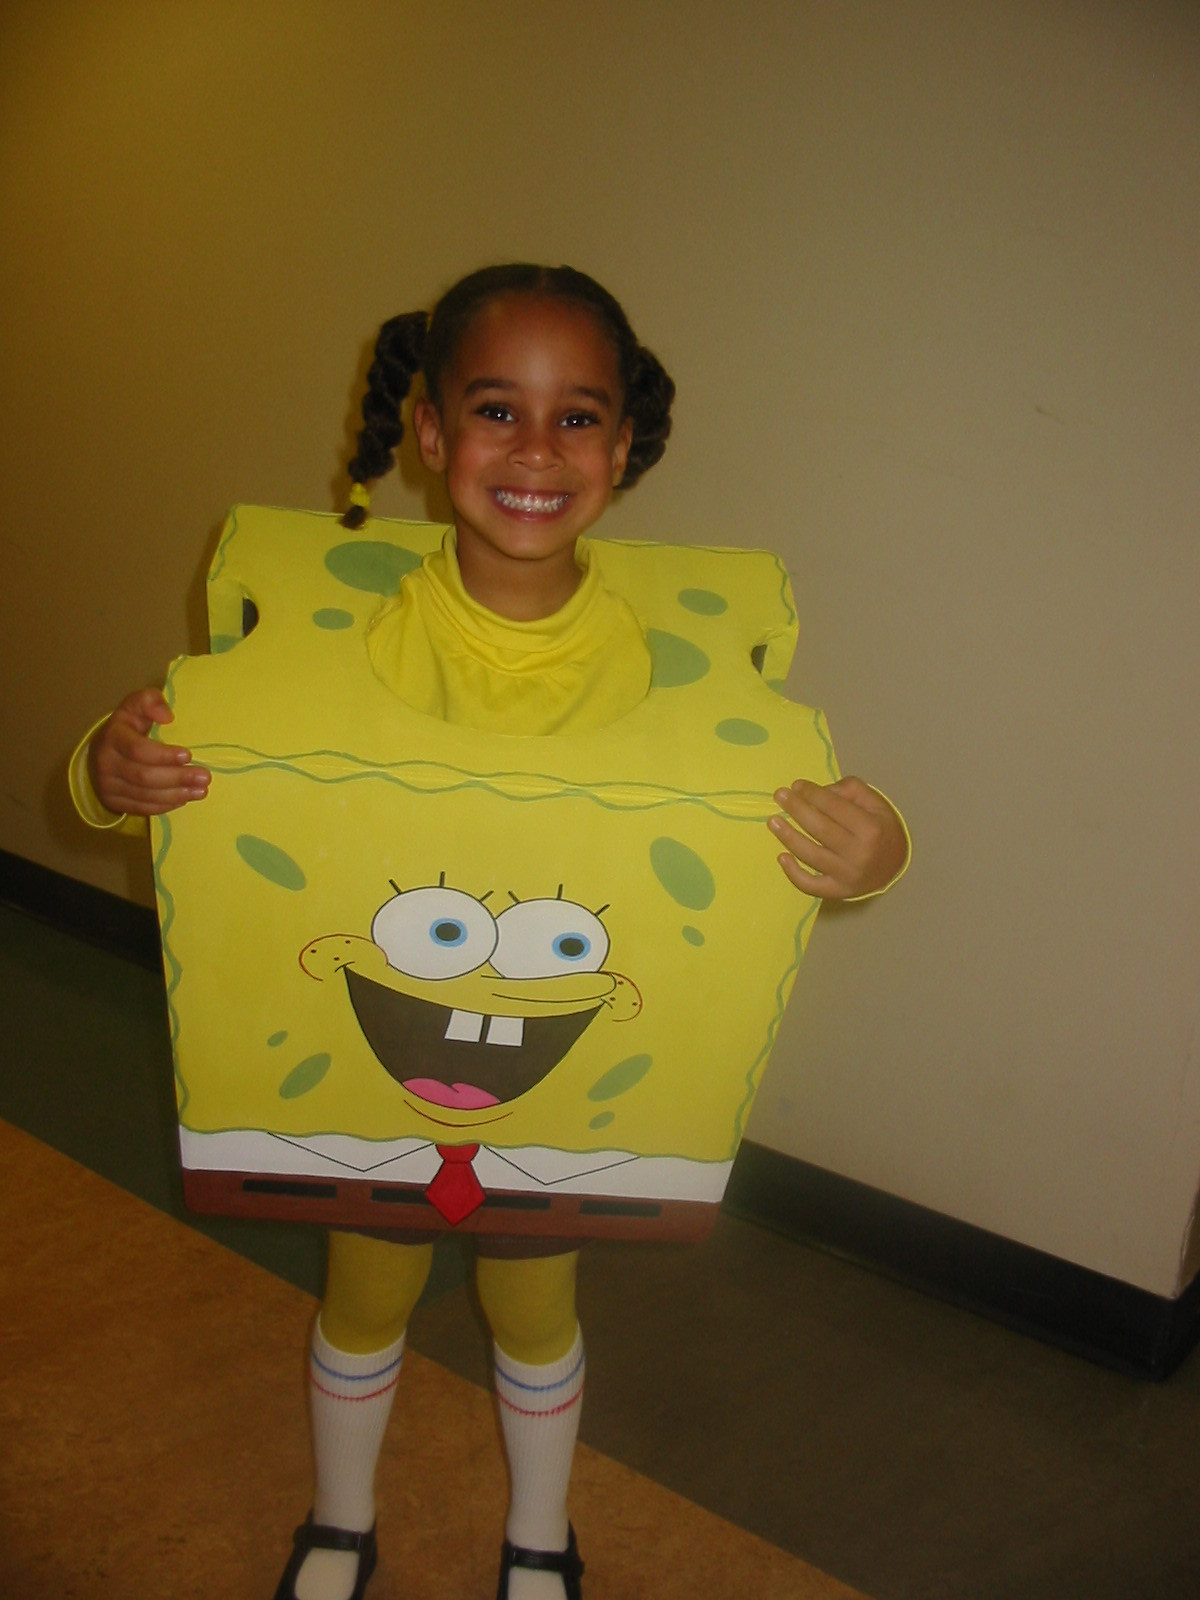 Best ideas about Spongebob Costume DIY
. Save or Pin Spongebob Squarepants costume Look just like the cartoon Now.